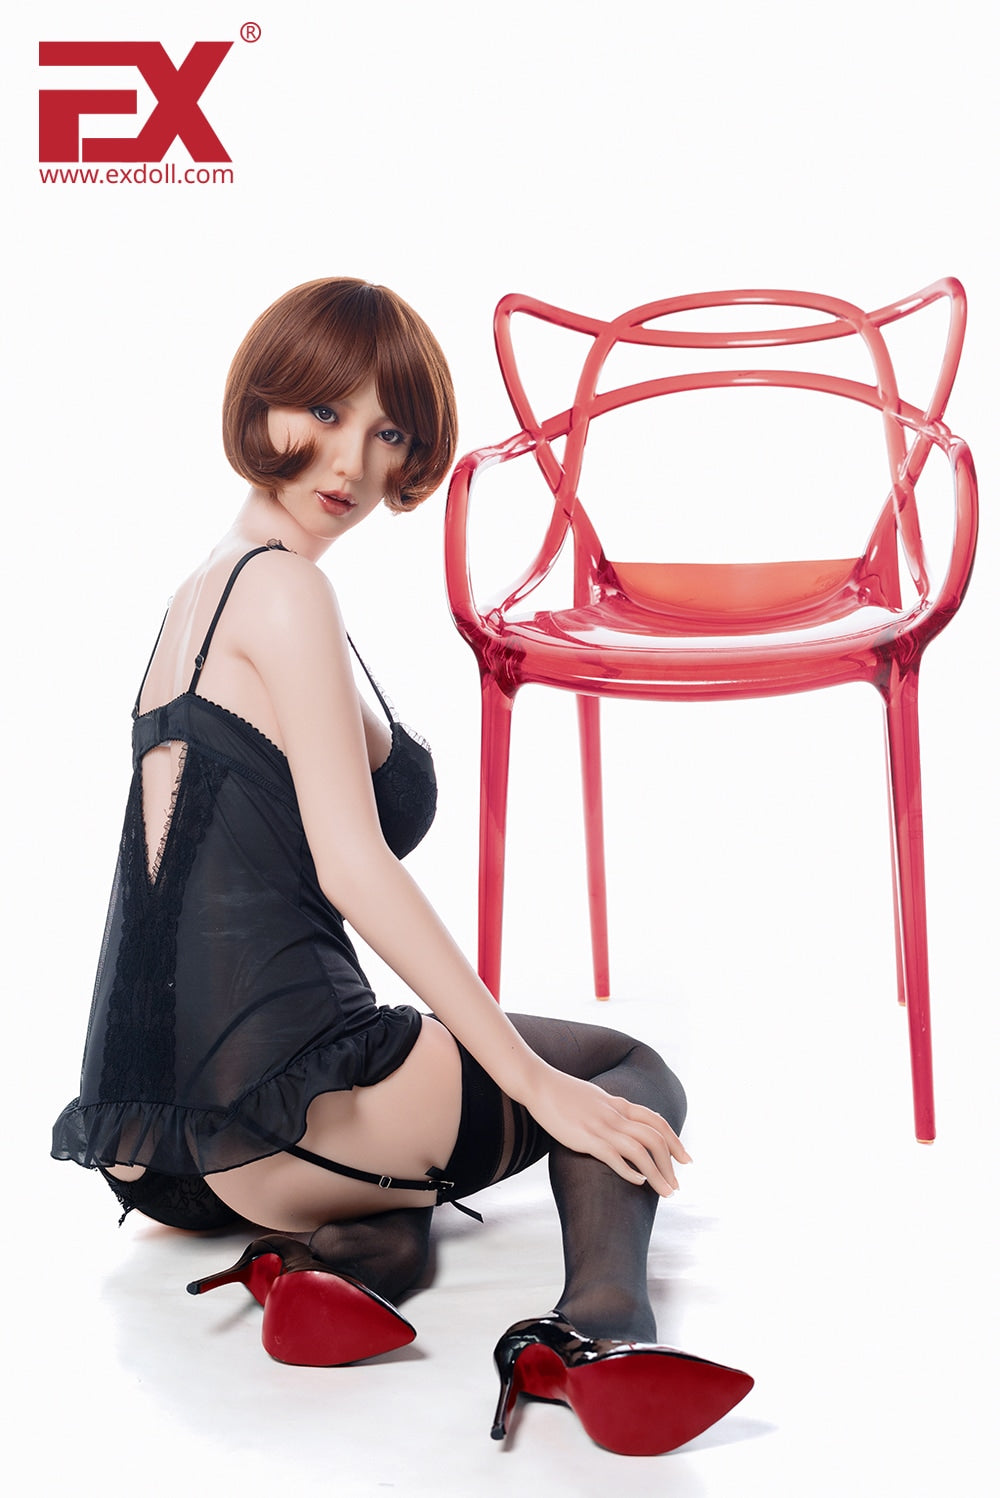 EX Doll Ukiyoe Series 170 cm Silicone - Yutsuki | Buy Sex Dolls at DOLLS ACTUALLY